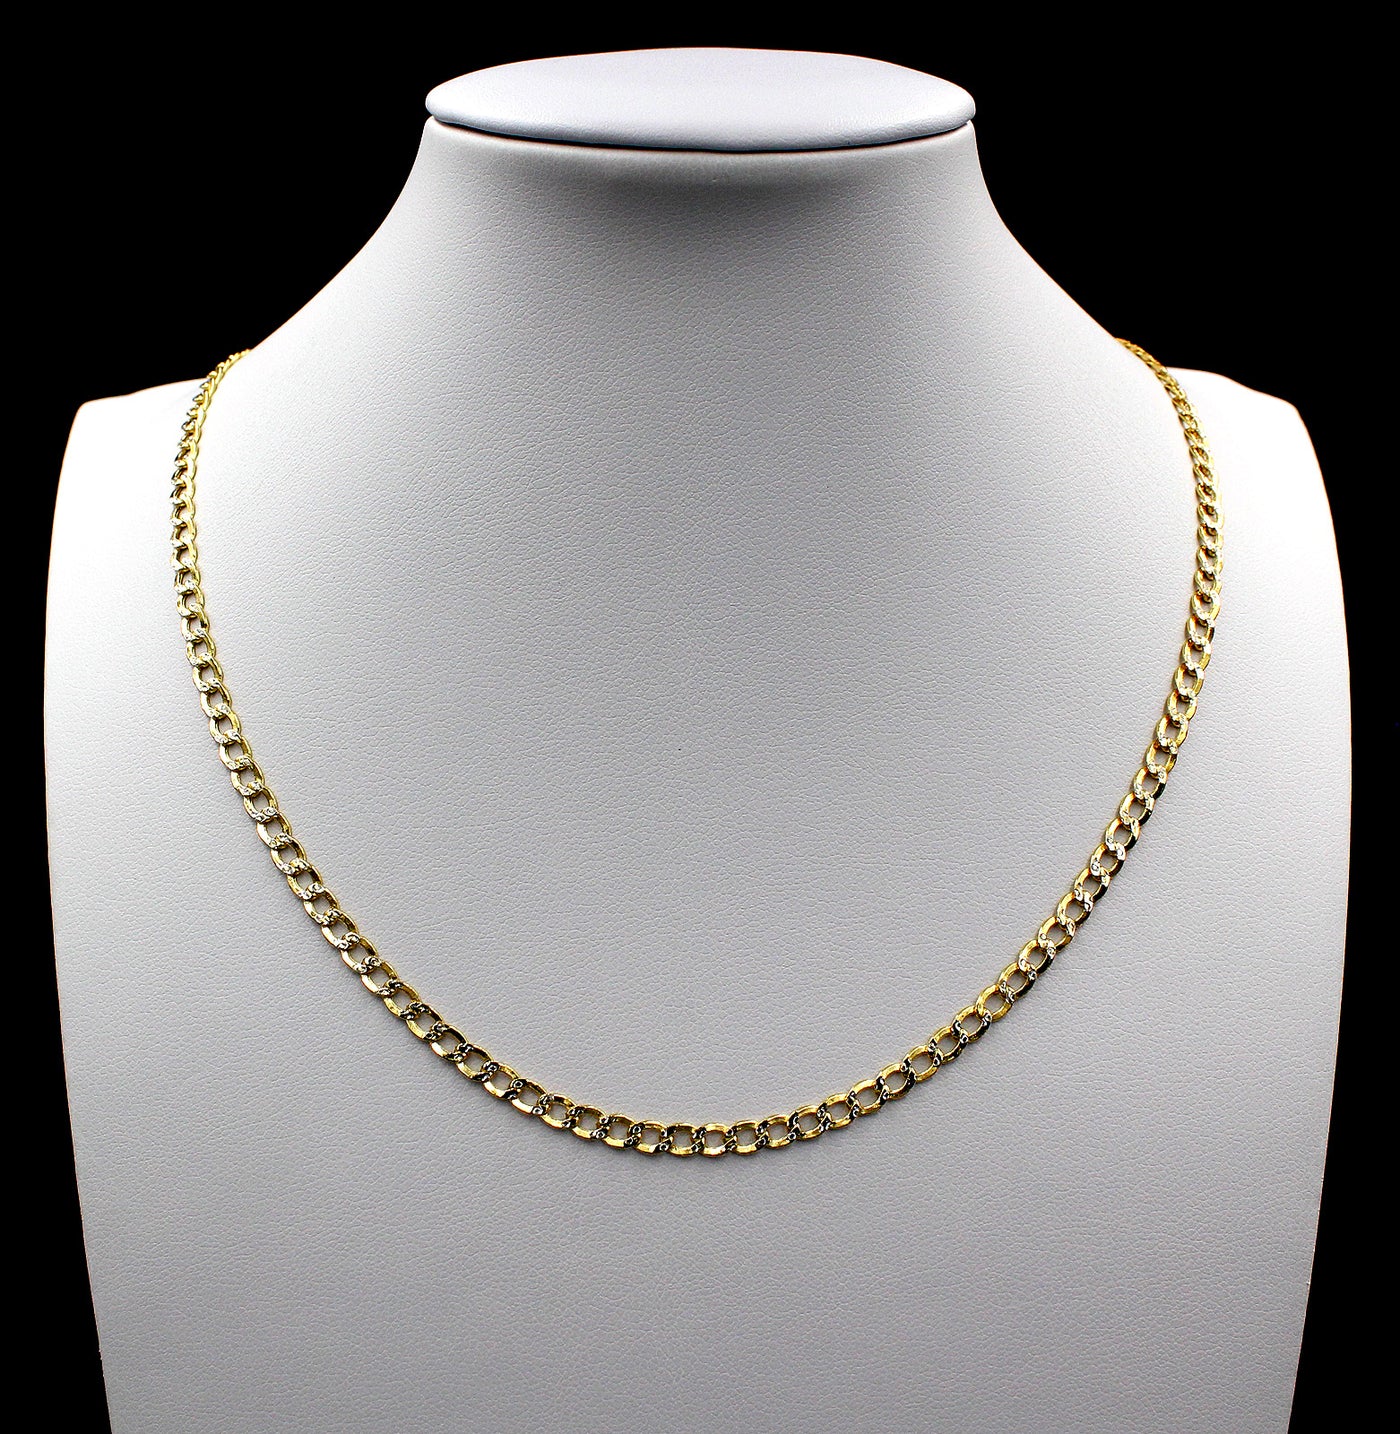 10K Yellow Gold Diamond Cut Cuban Link Chain Necklace 2MM 16" 18" 20" 22" 24"